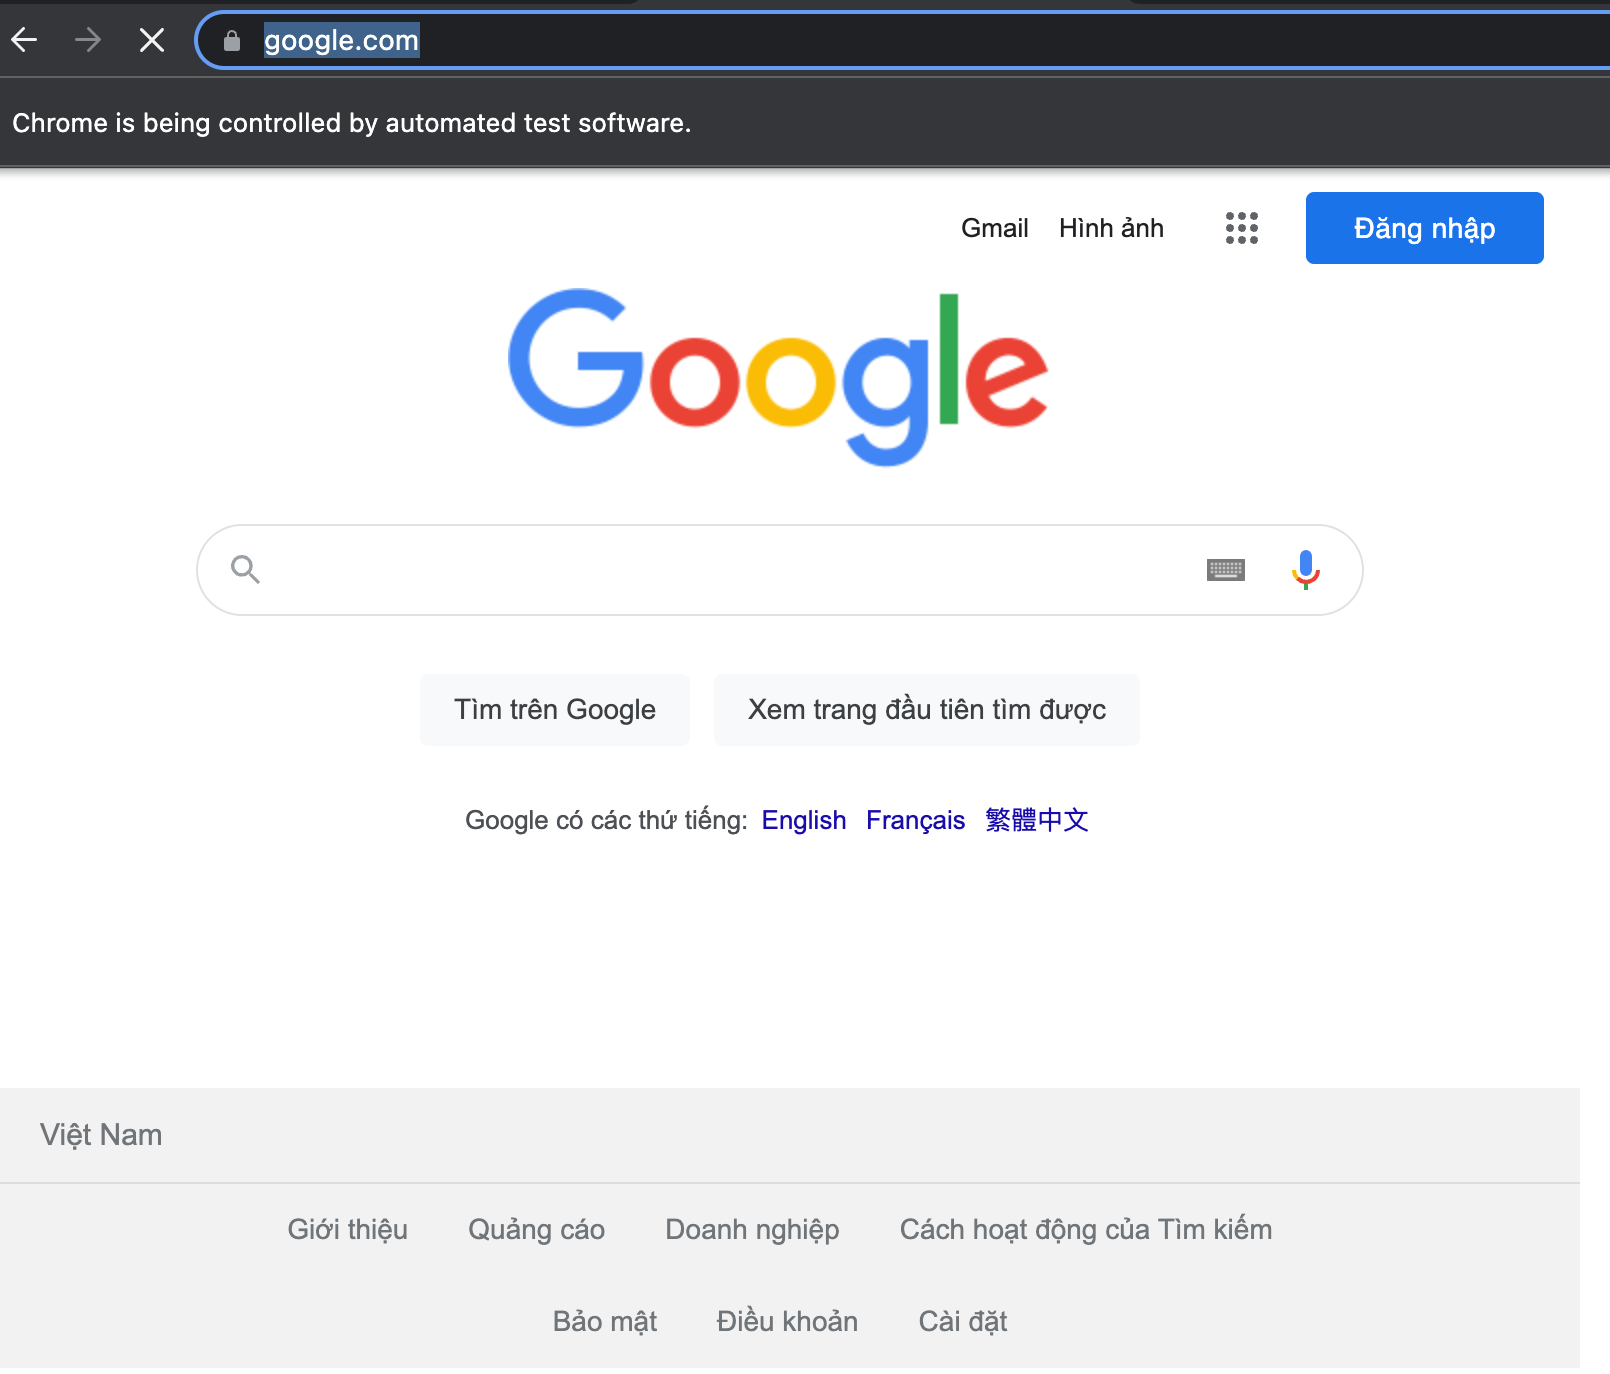 Vietnamese Google